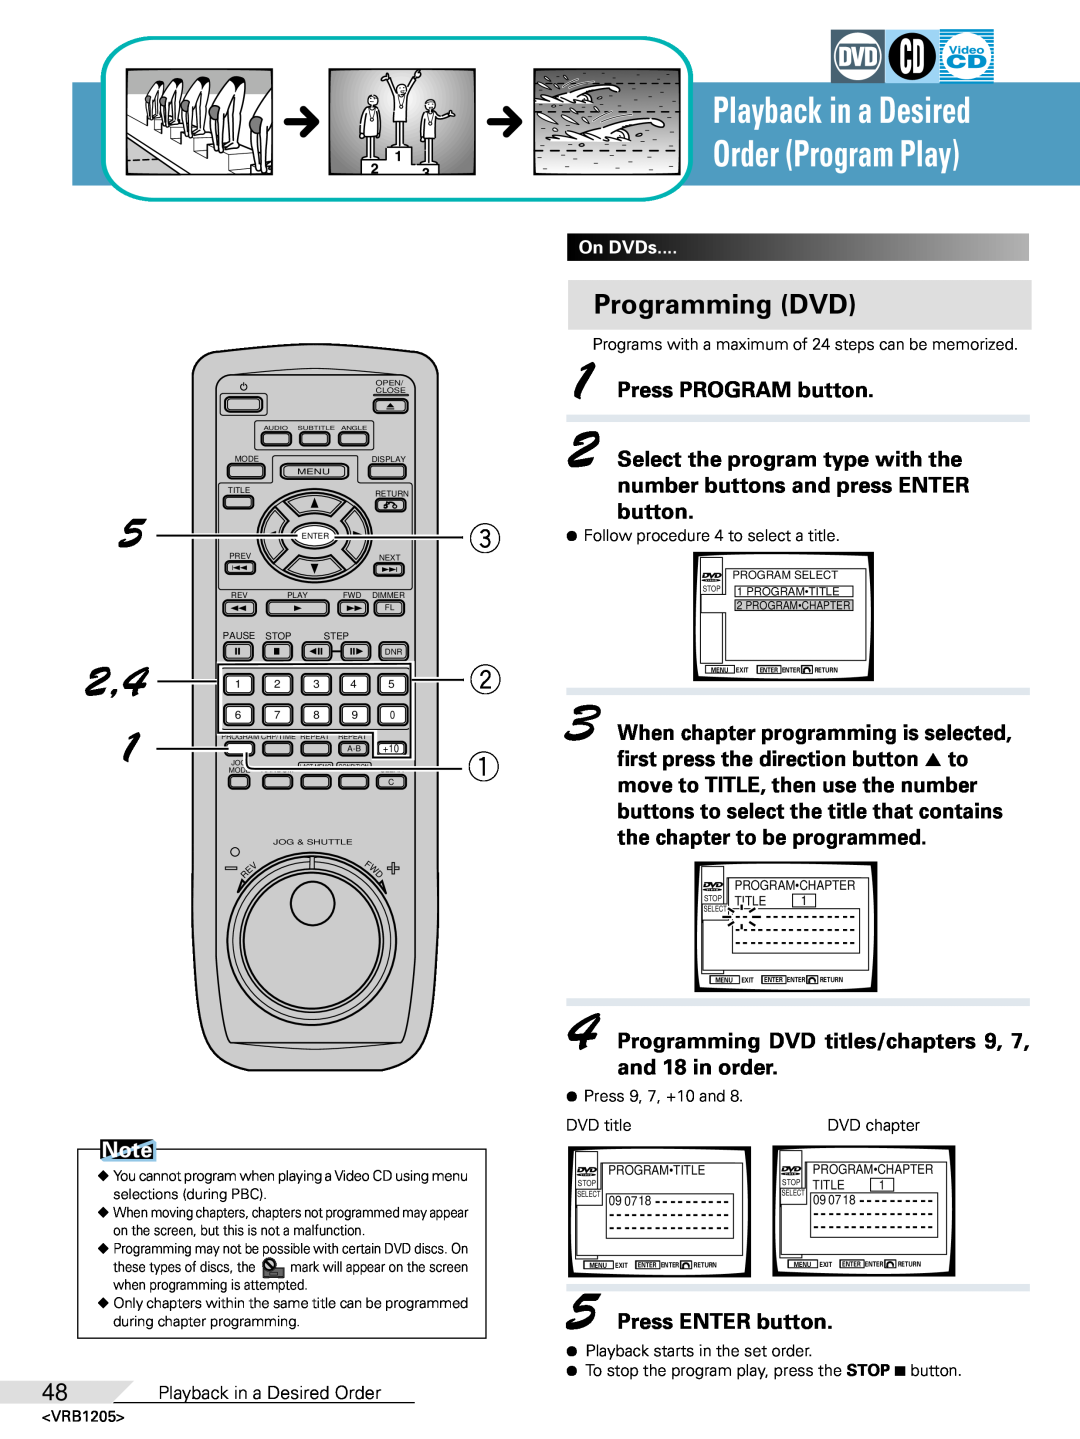 Pioneer DV-05 Programming DVD, Playback in a Desired, Order Program Play, Press PROGRAM button, Press ENTER button, OnDVDs 